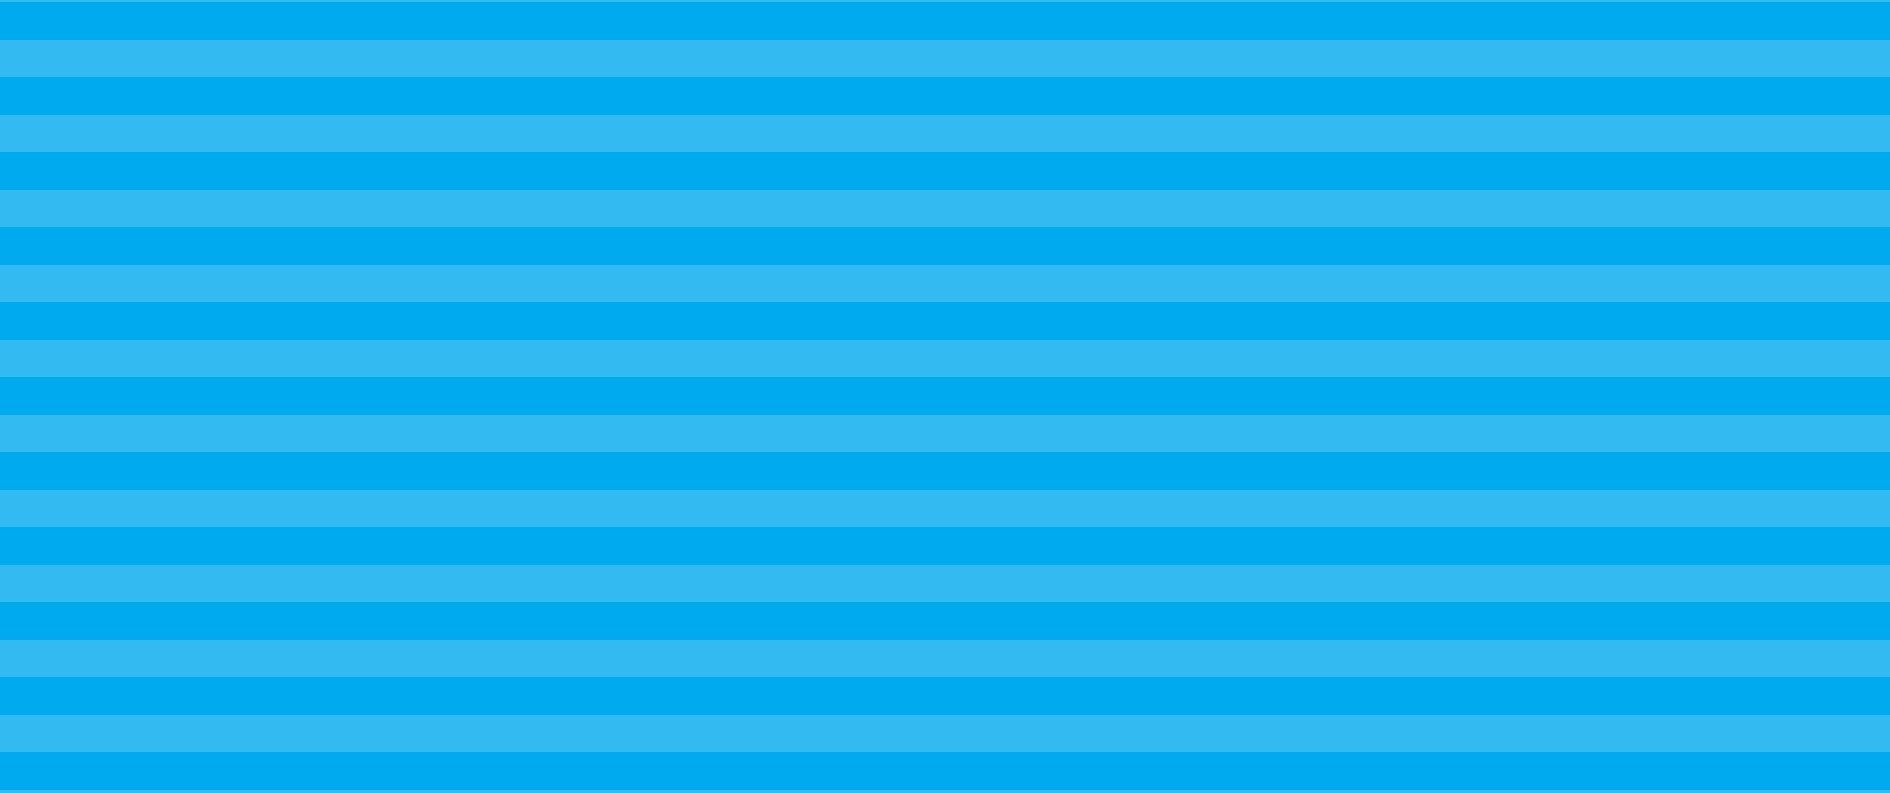 Blue strips background pattern